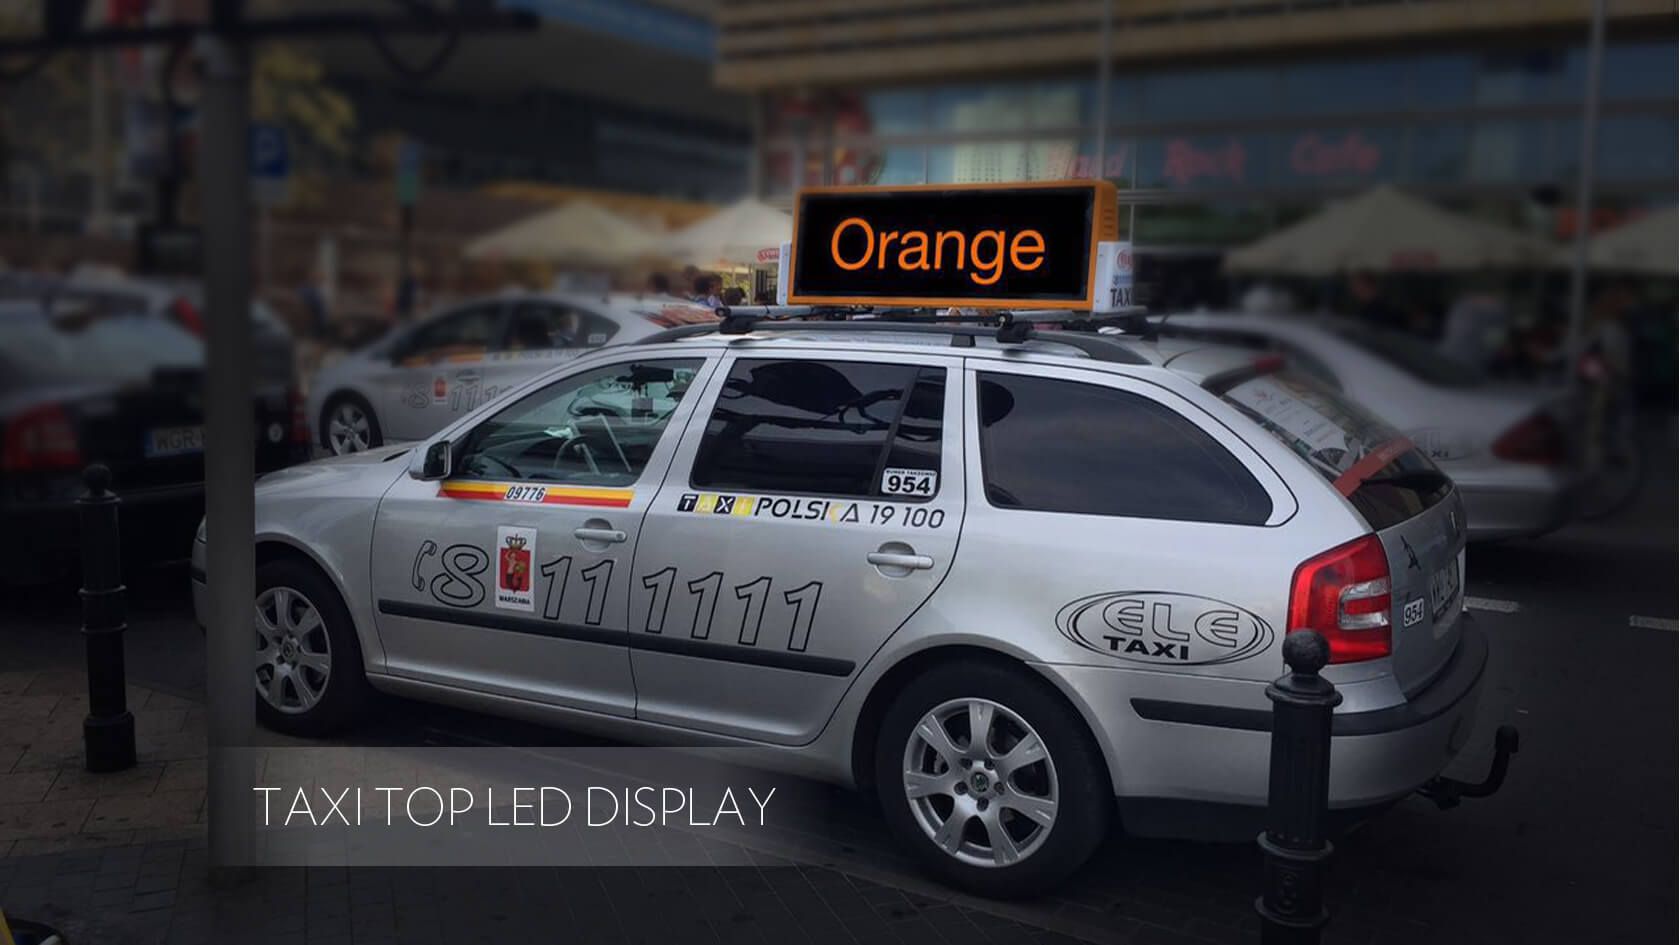 NSELED Taxi LED display